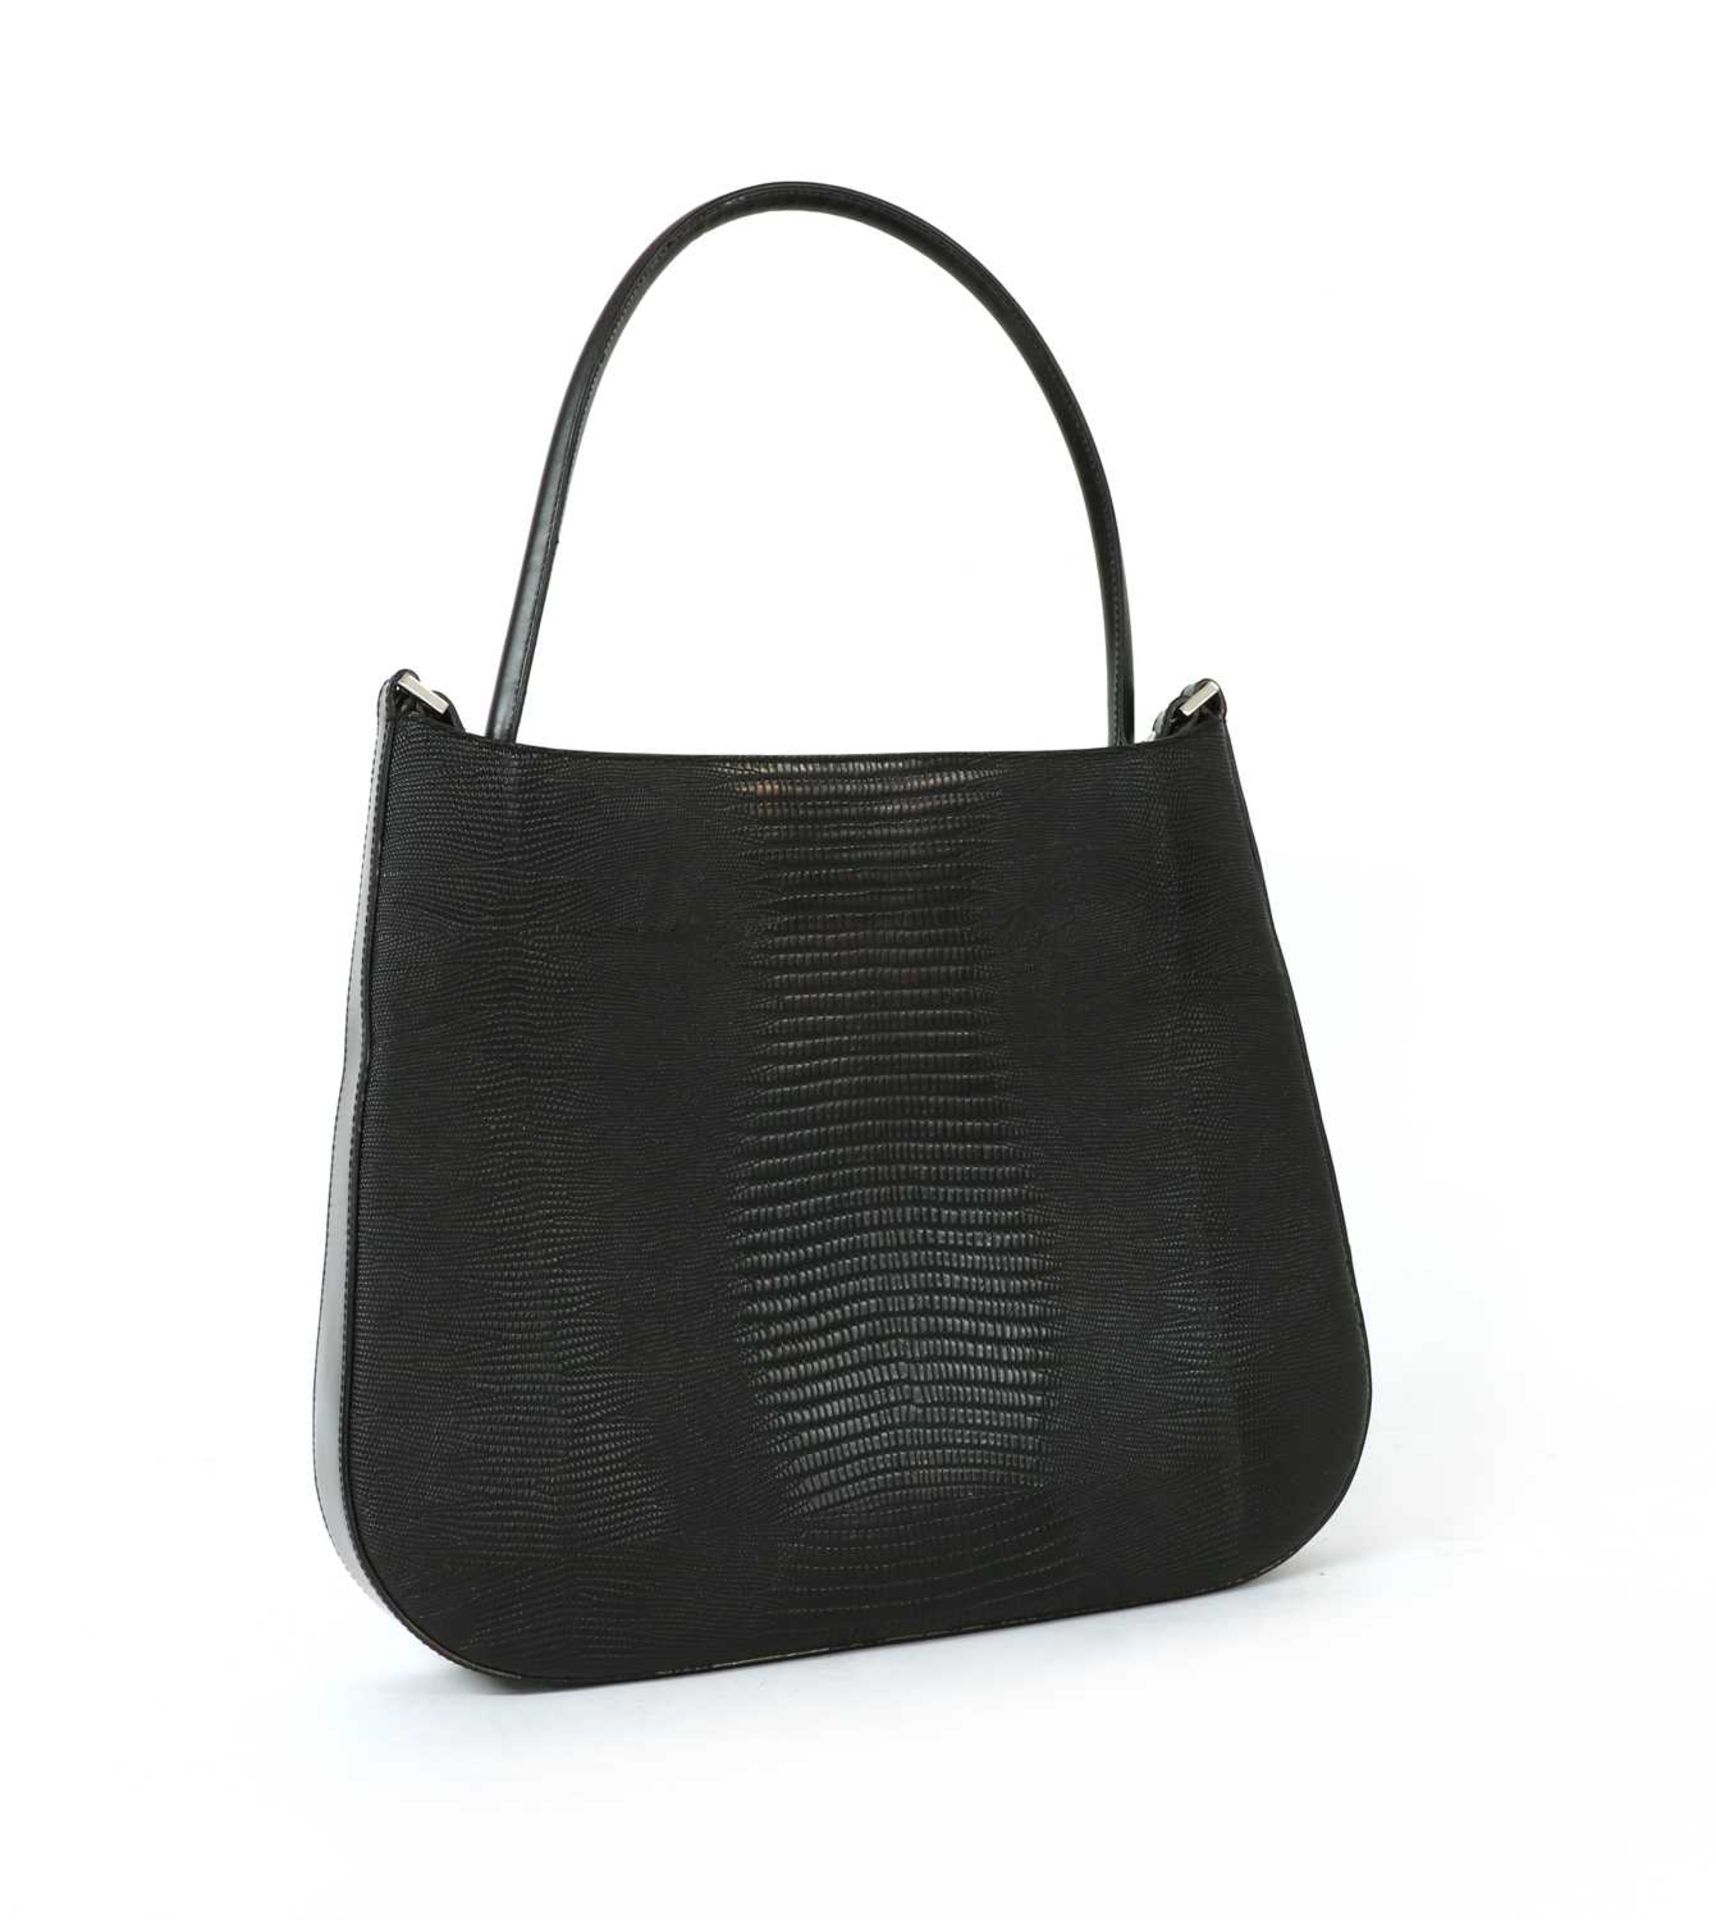 A vintage Salvatore Ferragamo black lizard skin tote bag